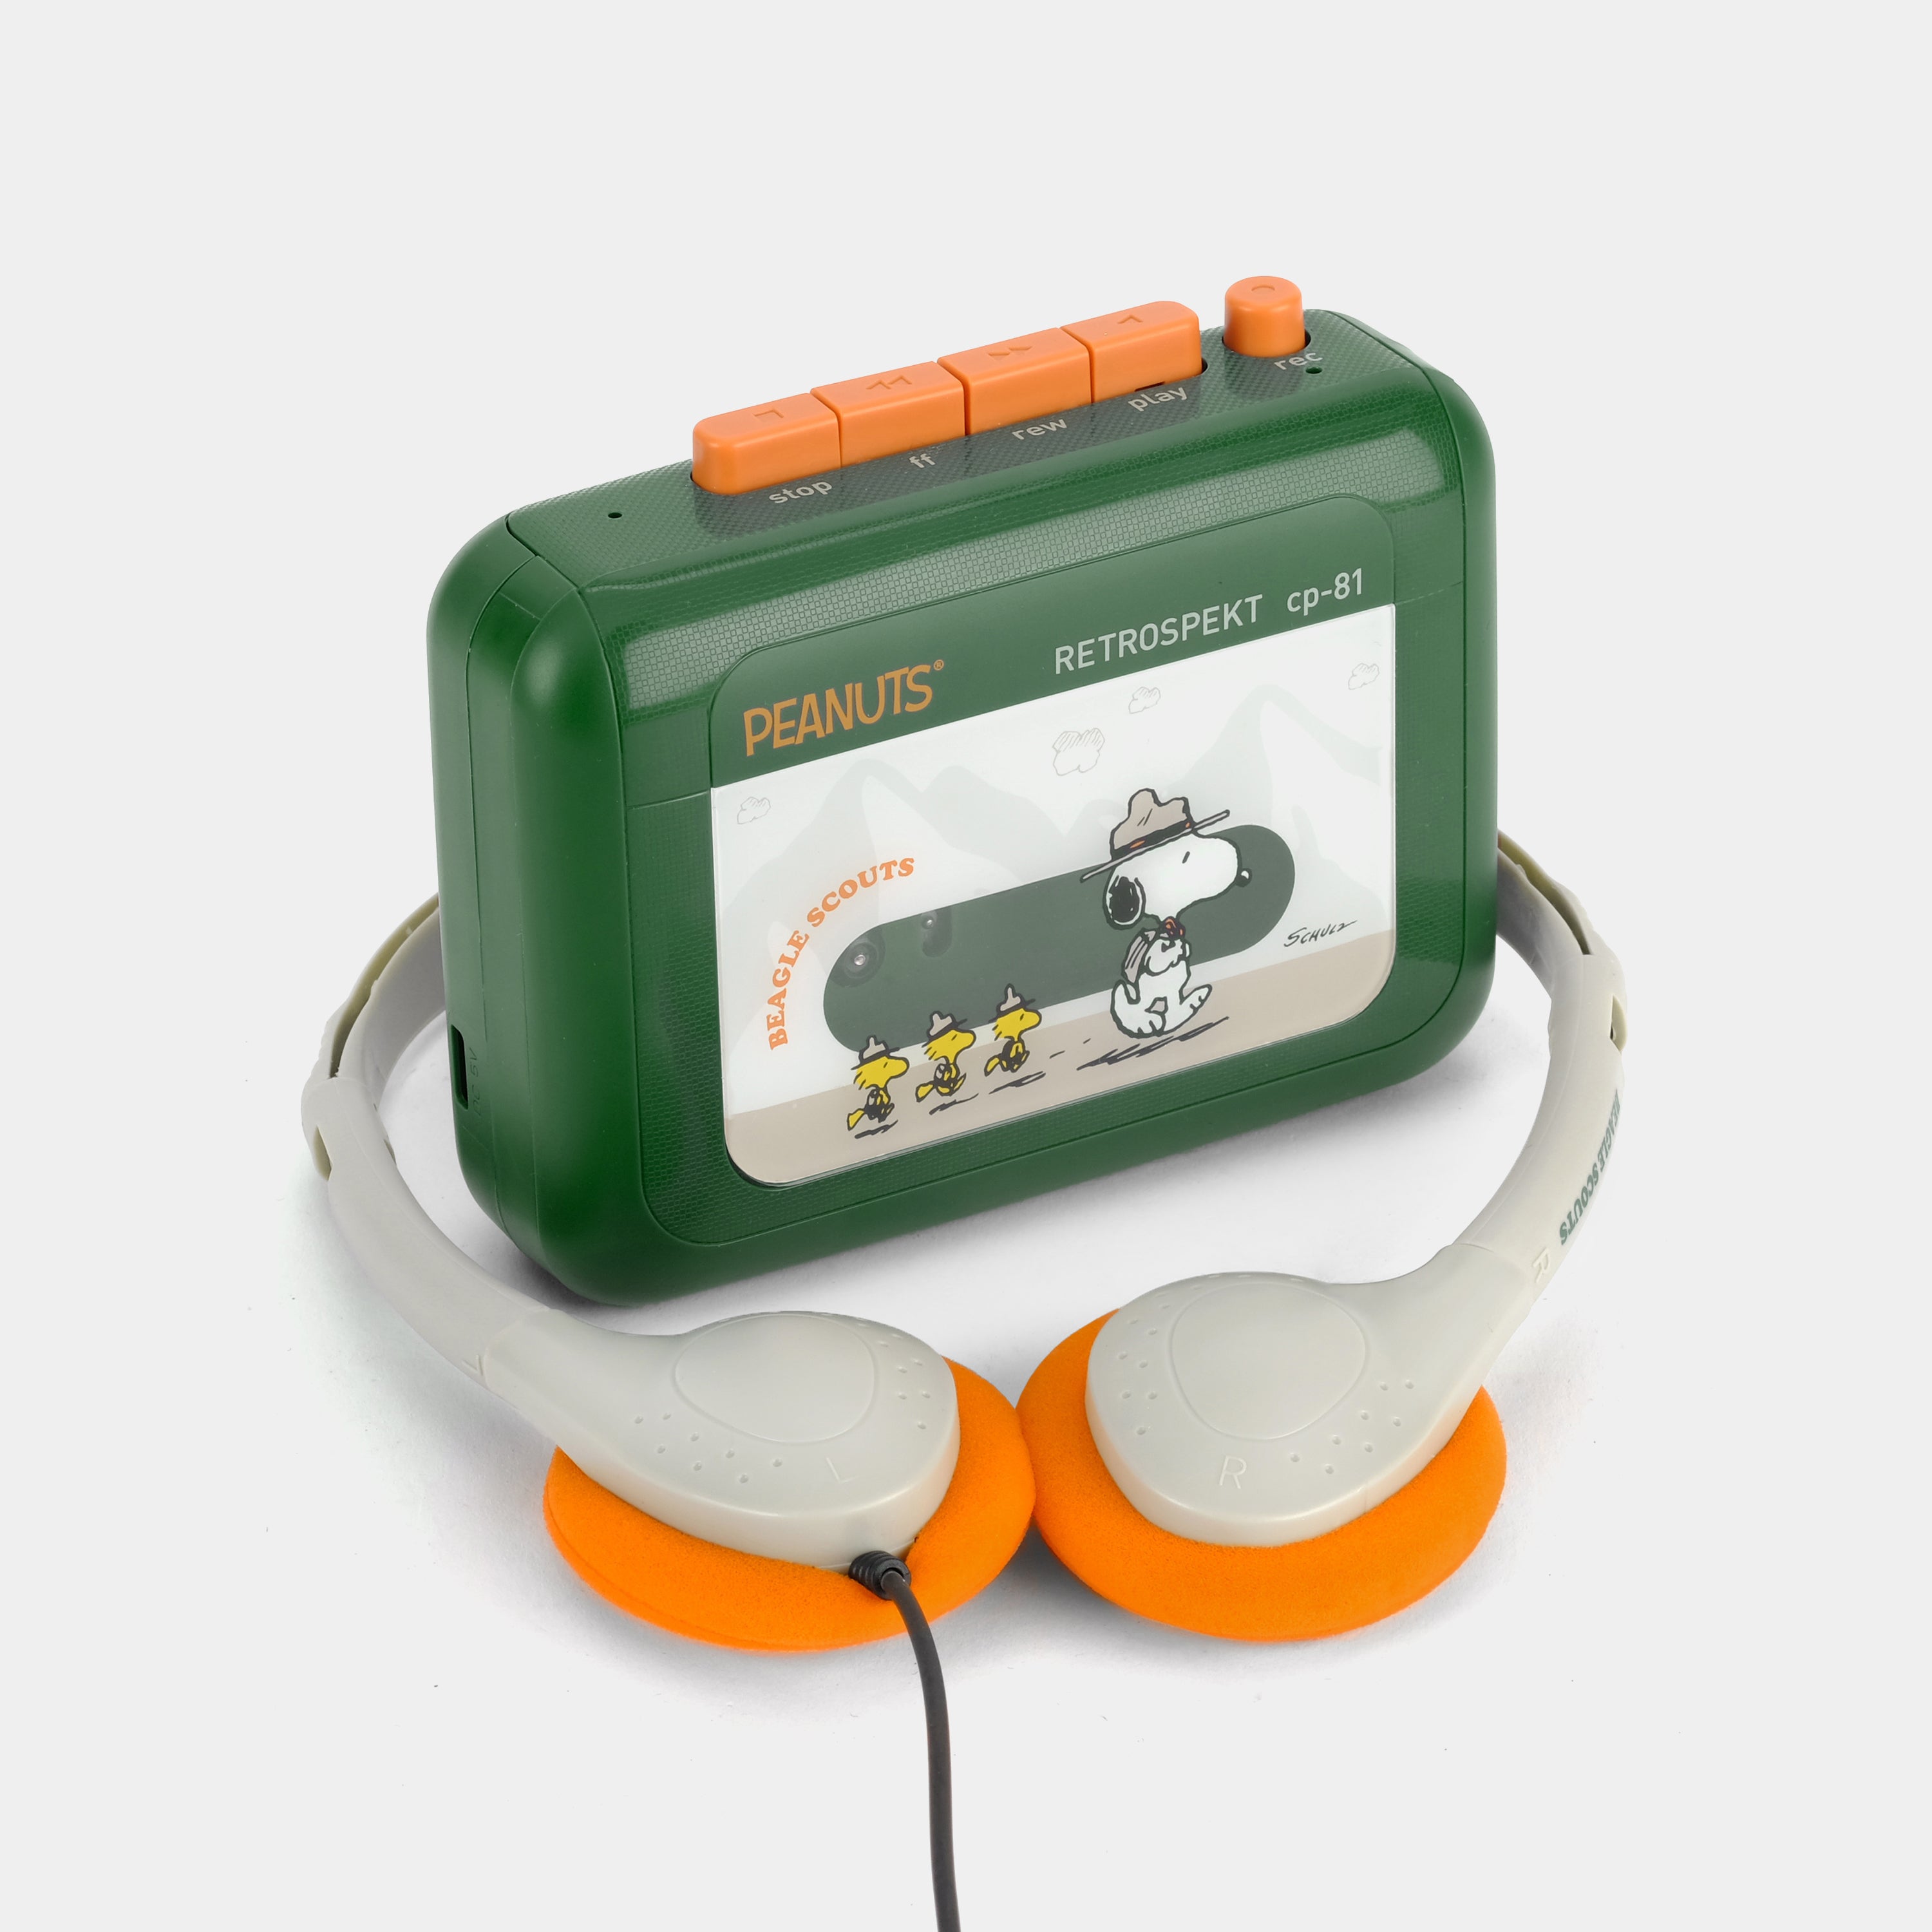 *Preorder* Peanuts Beagle Scouts Retrospekt CP-81 Portable Cassette Player